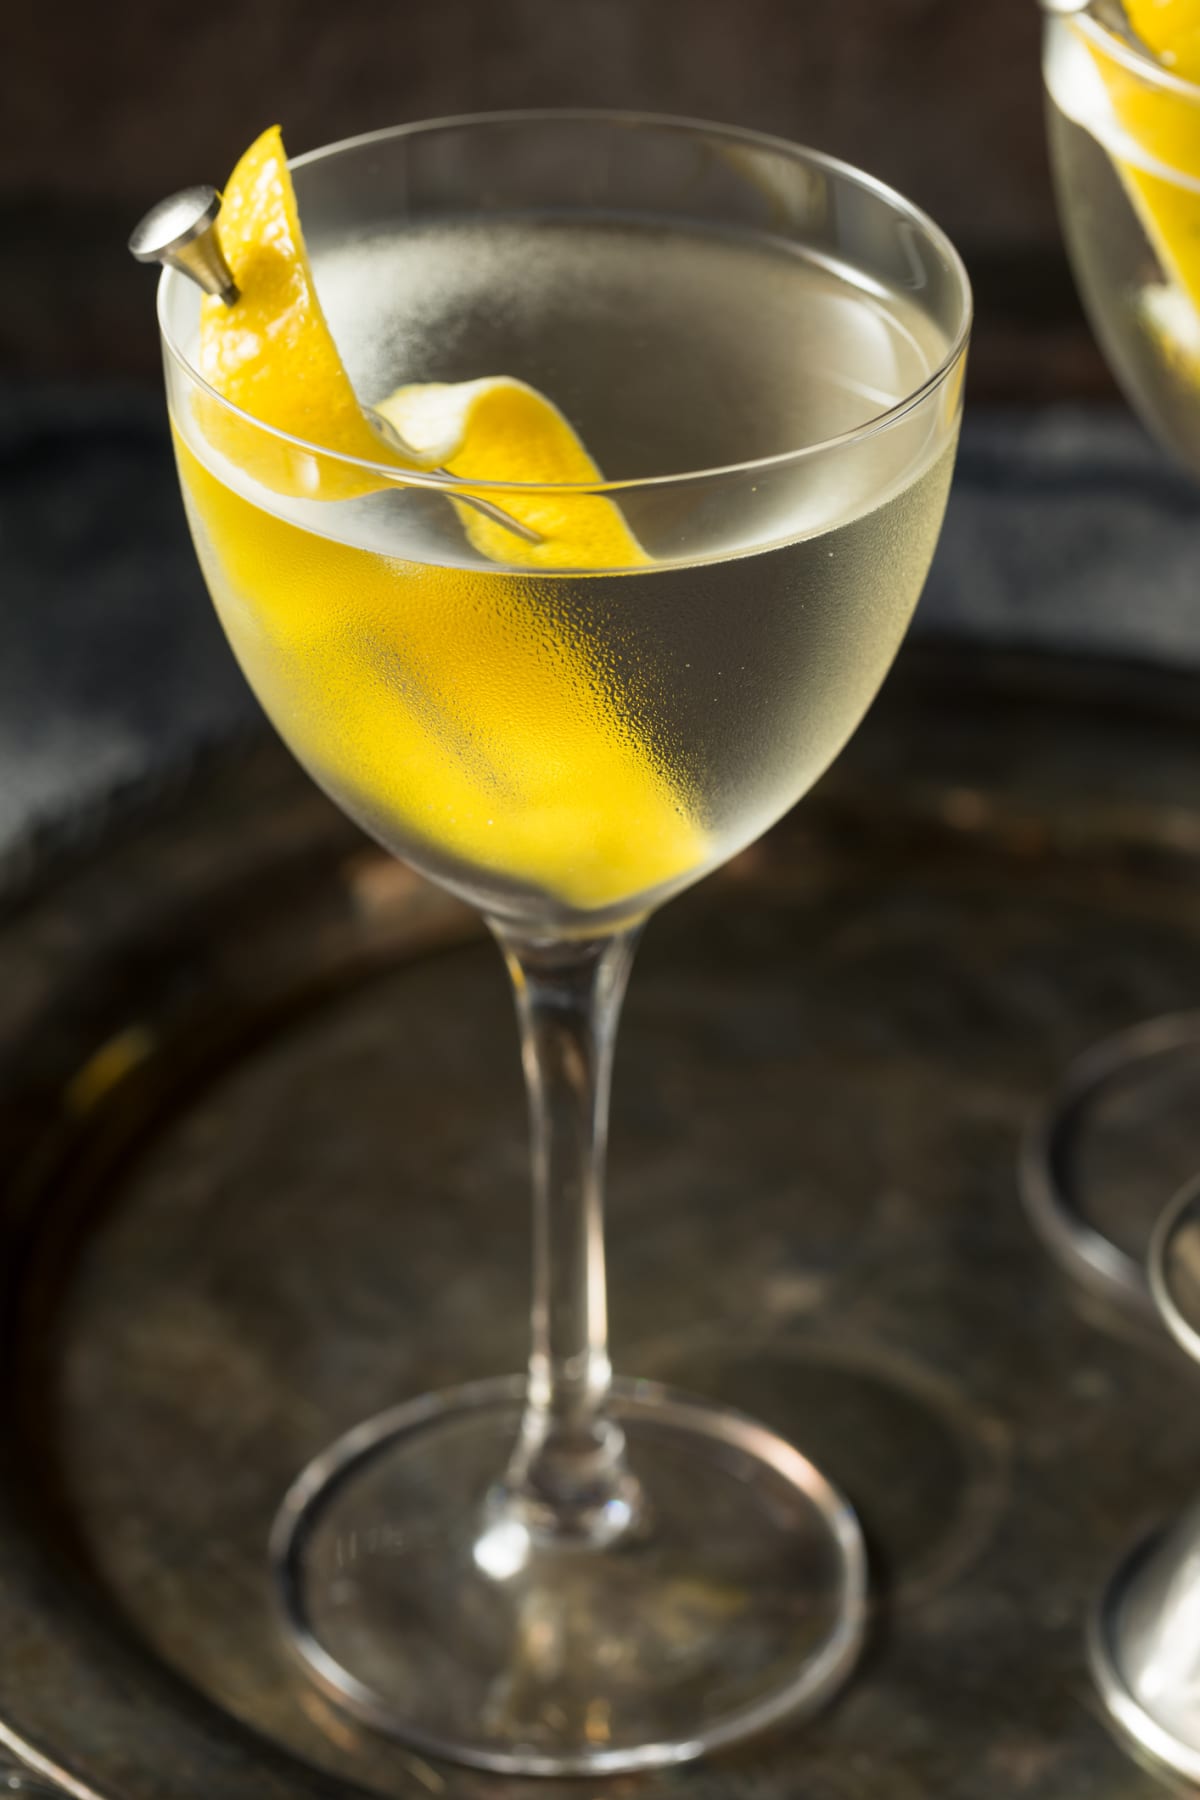 Vesper martini with lemon peel garnish